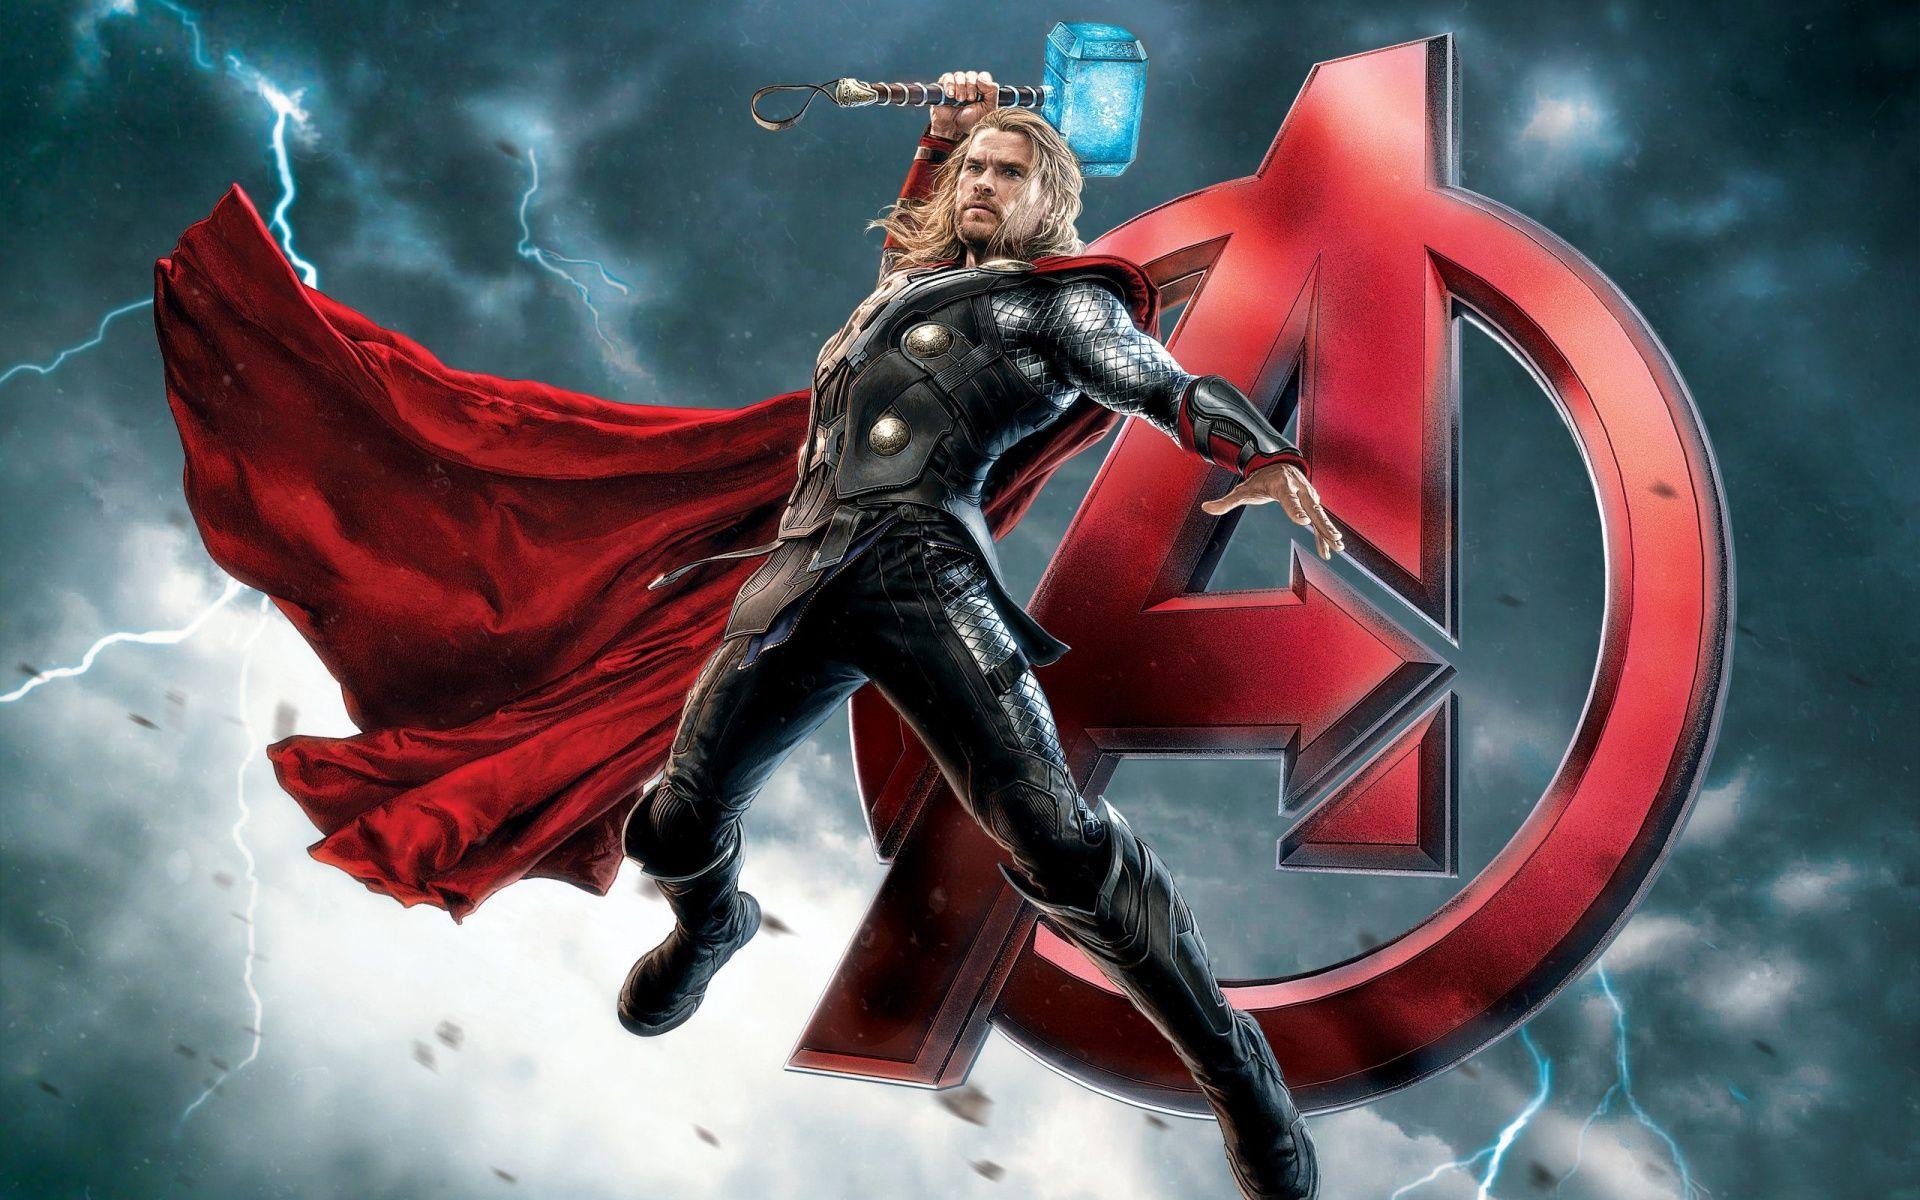 Thor Avengers Wallpaper in jpg format for free download